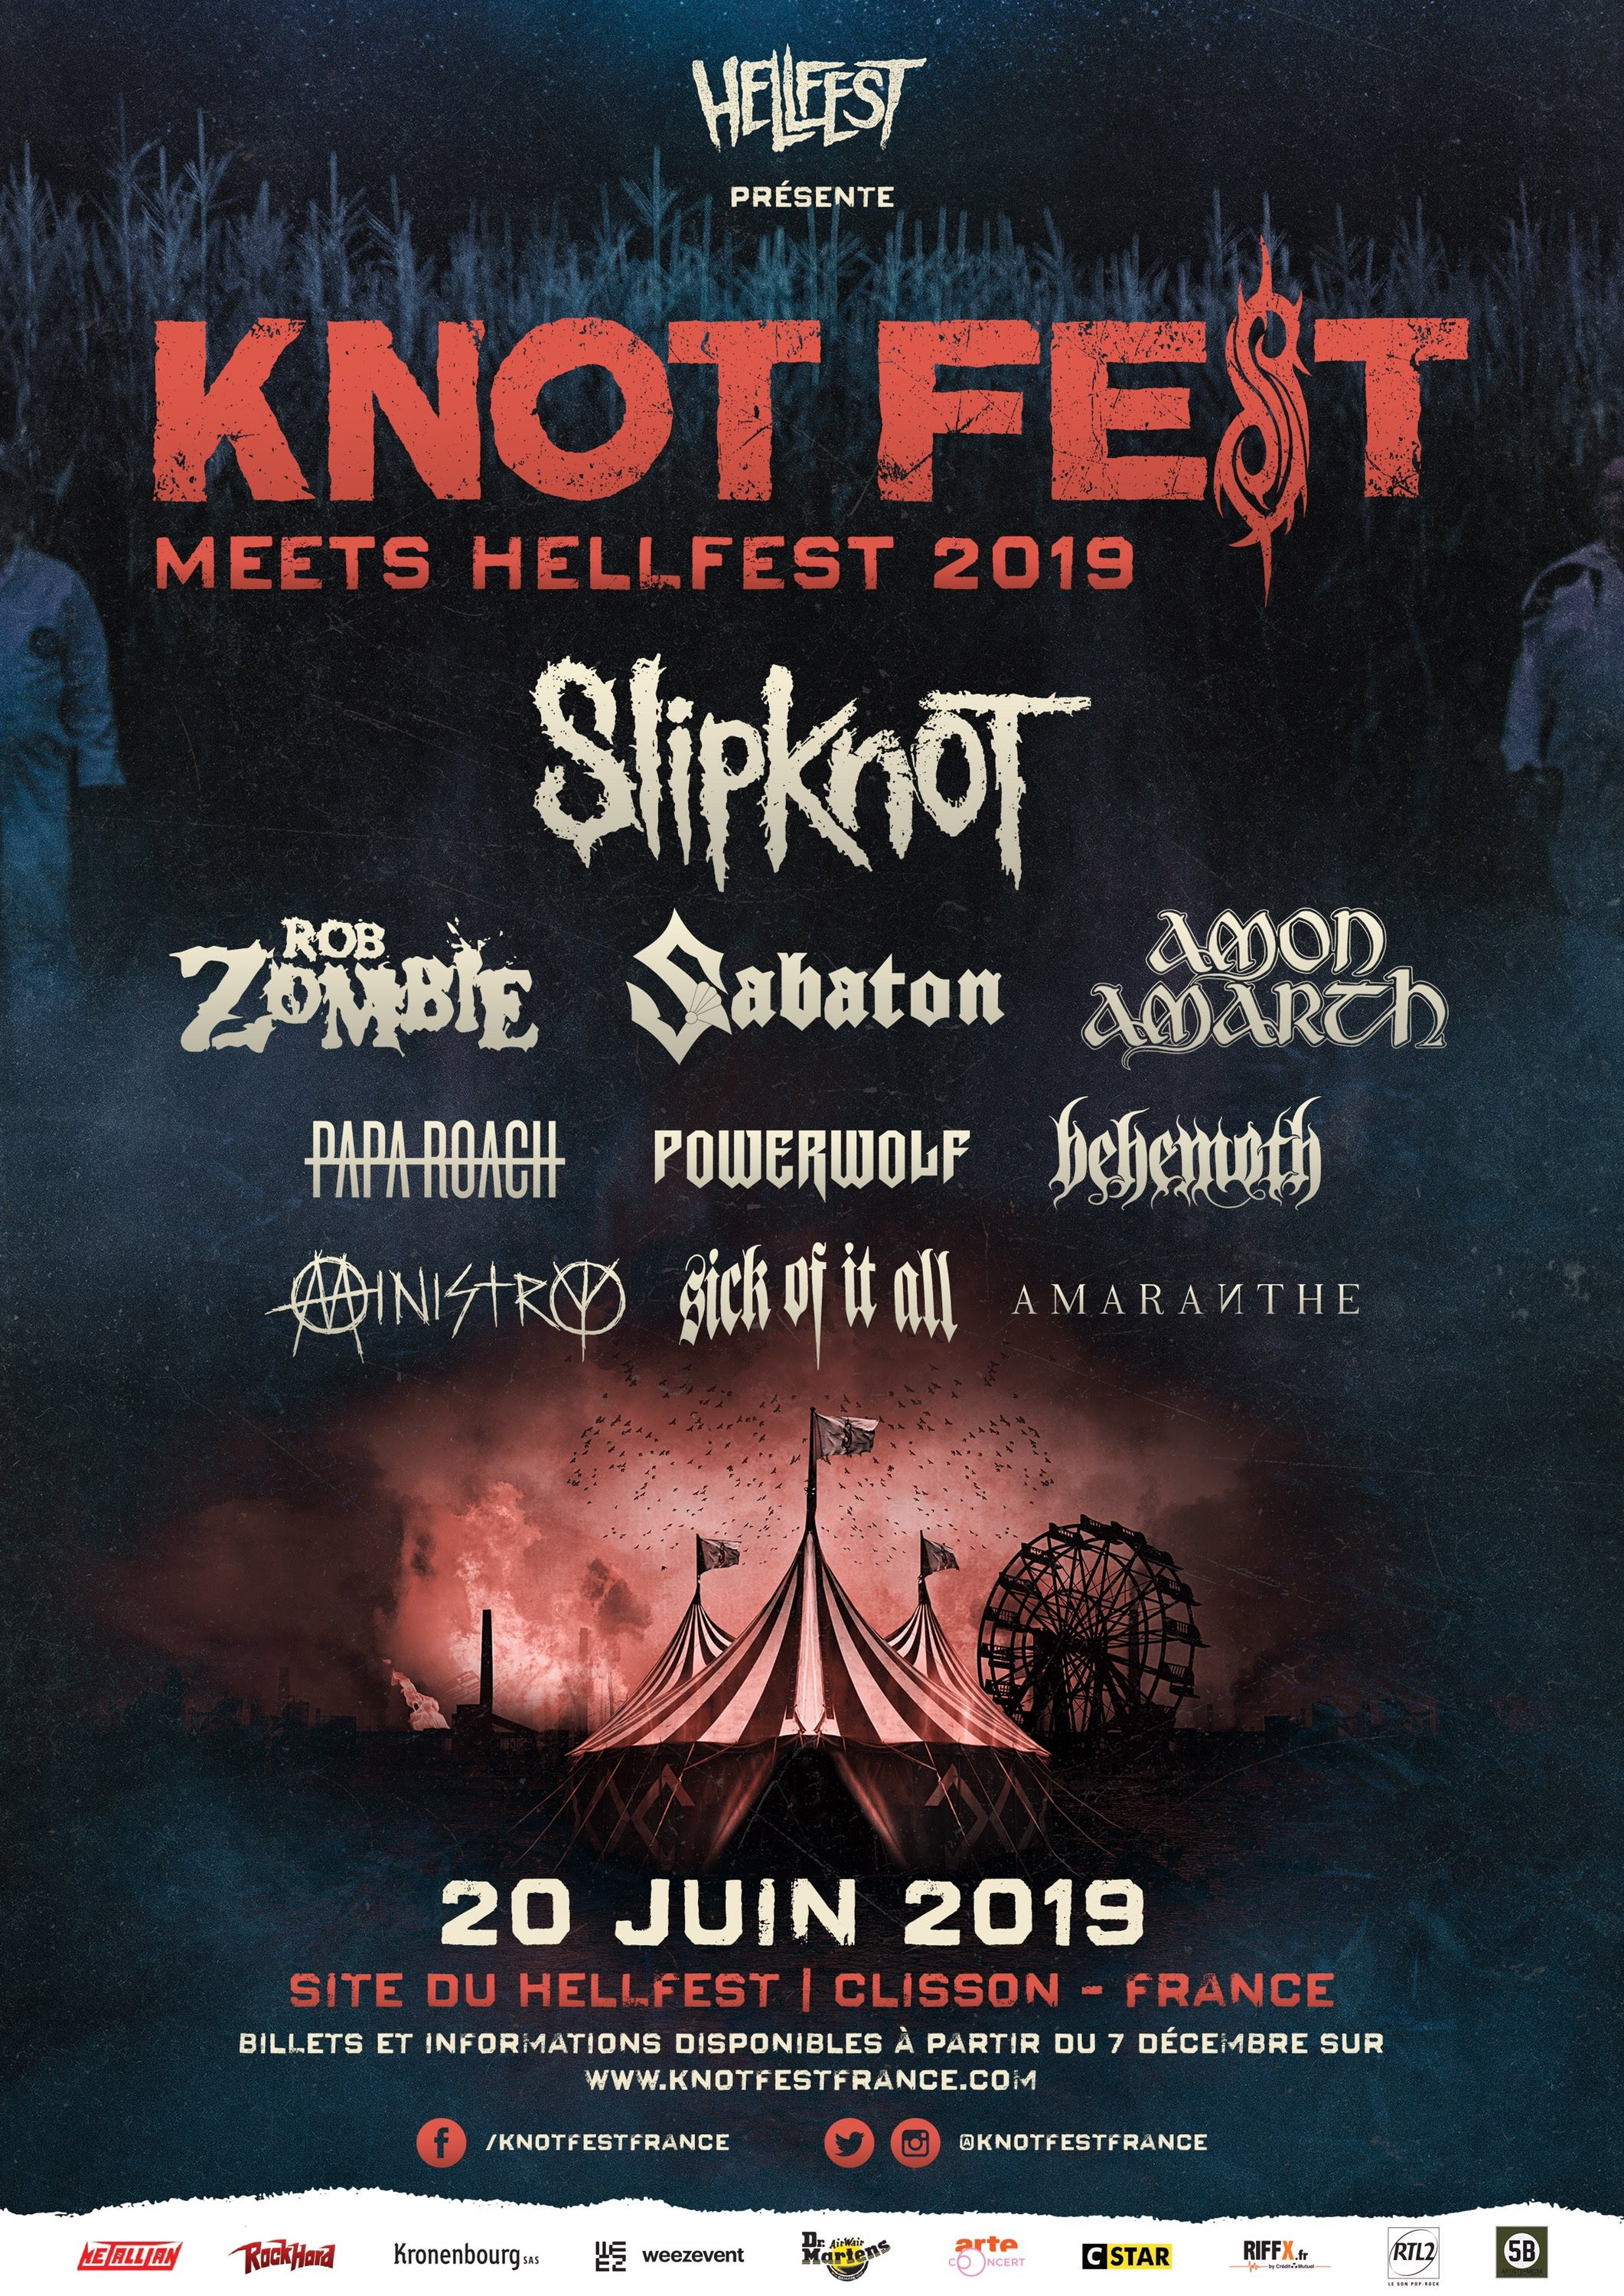 Knotfest meets Hellfest